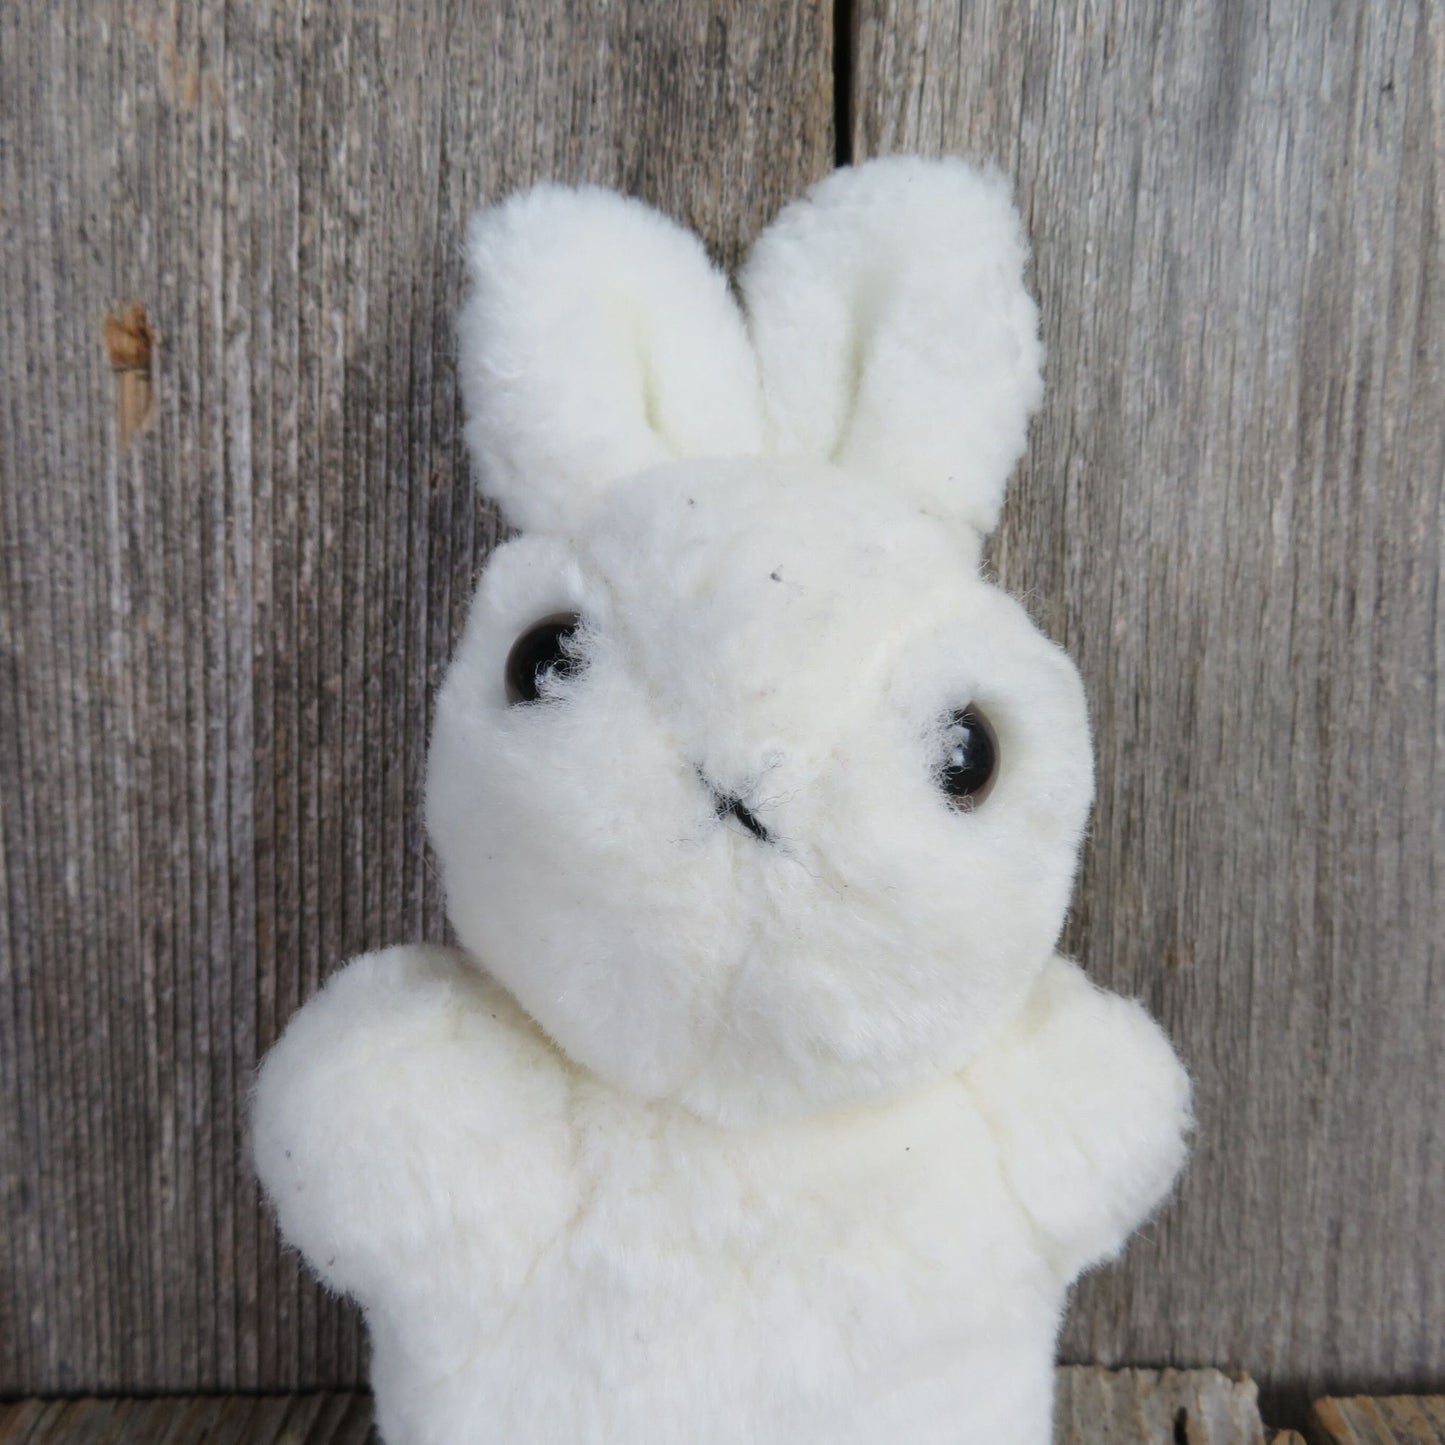 Vintage Tiny White Bunny Plush Stitched Cross Nose White Ears Rabbit Stuffed Animal